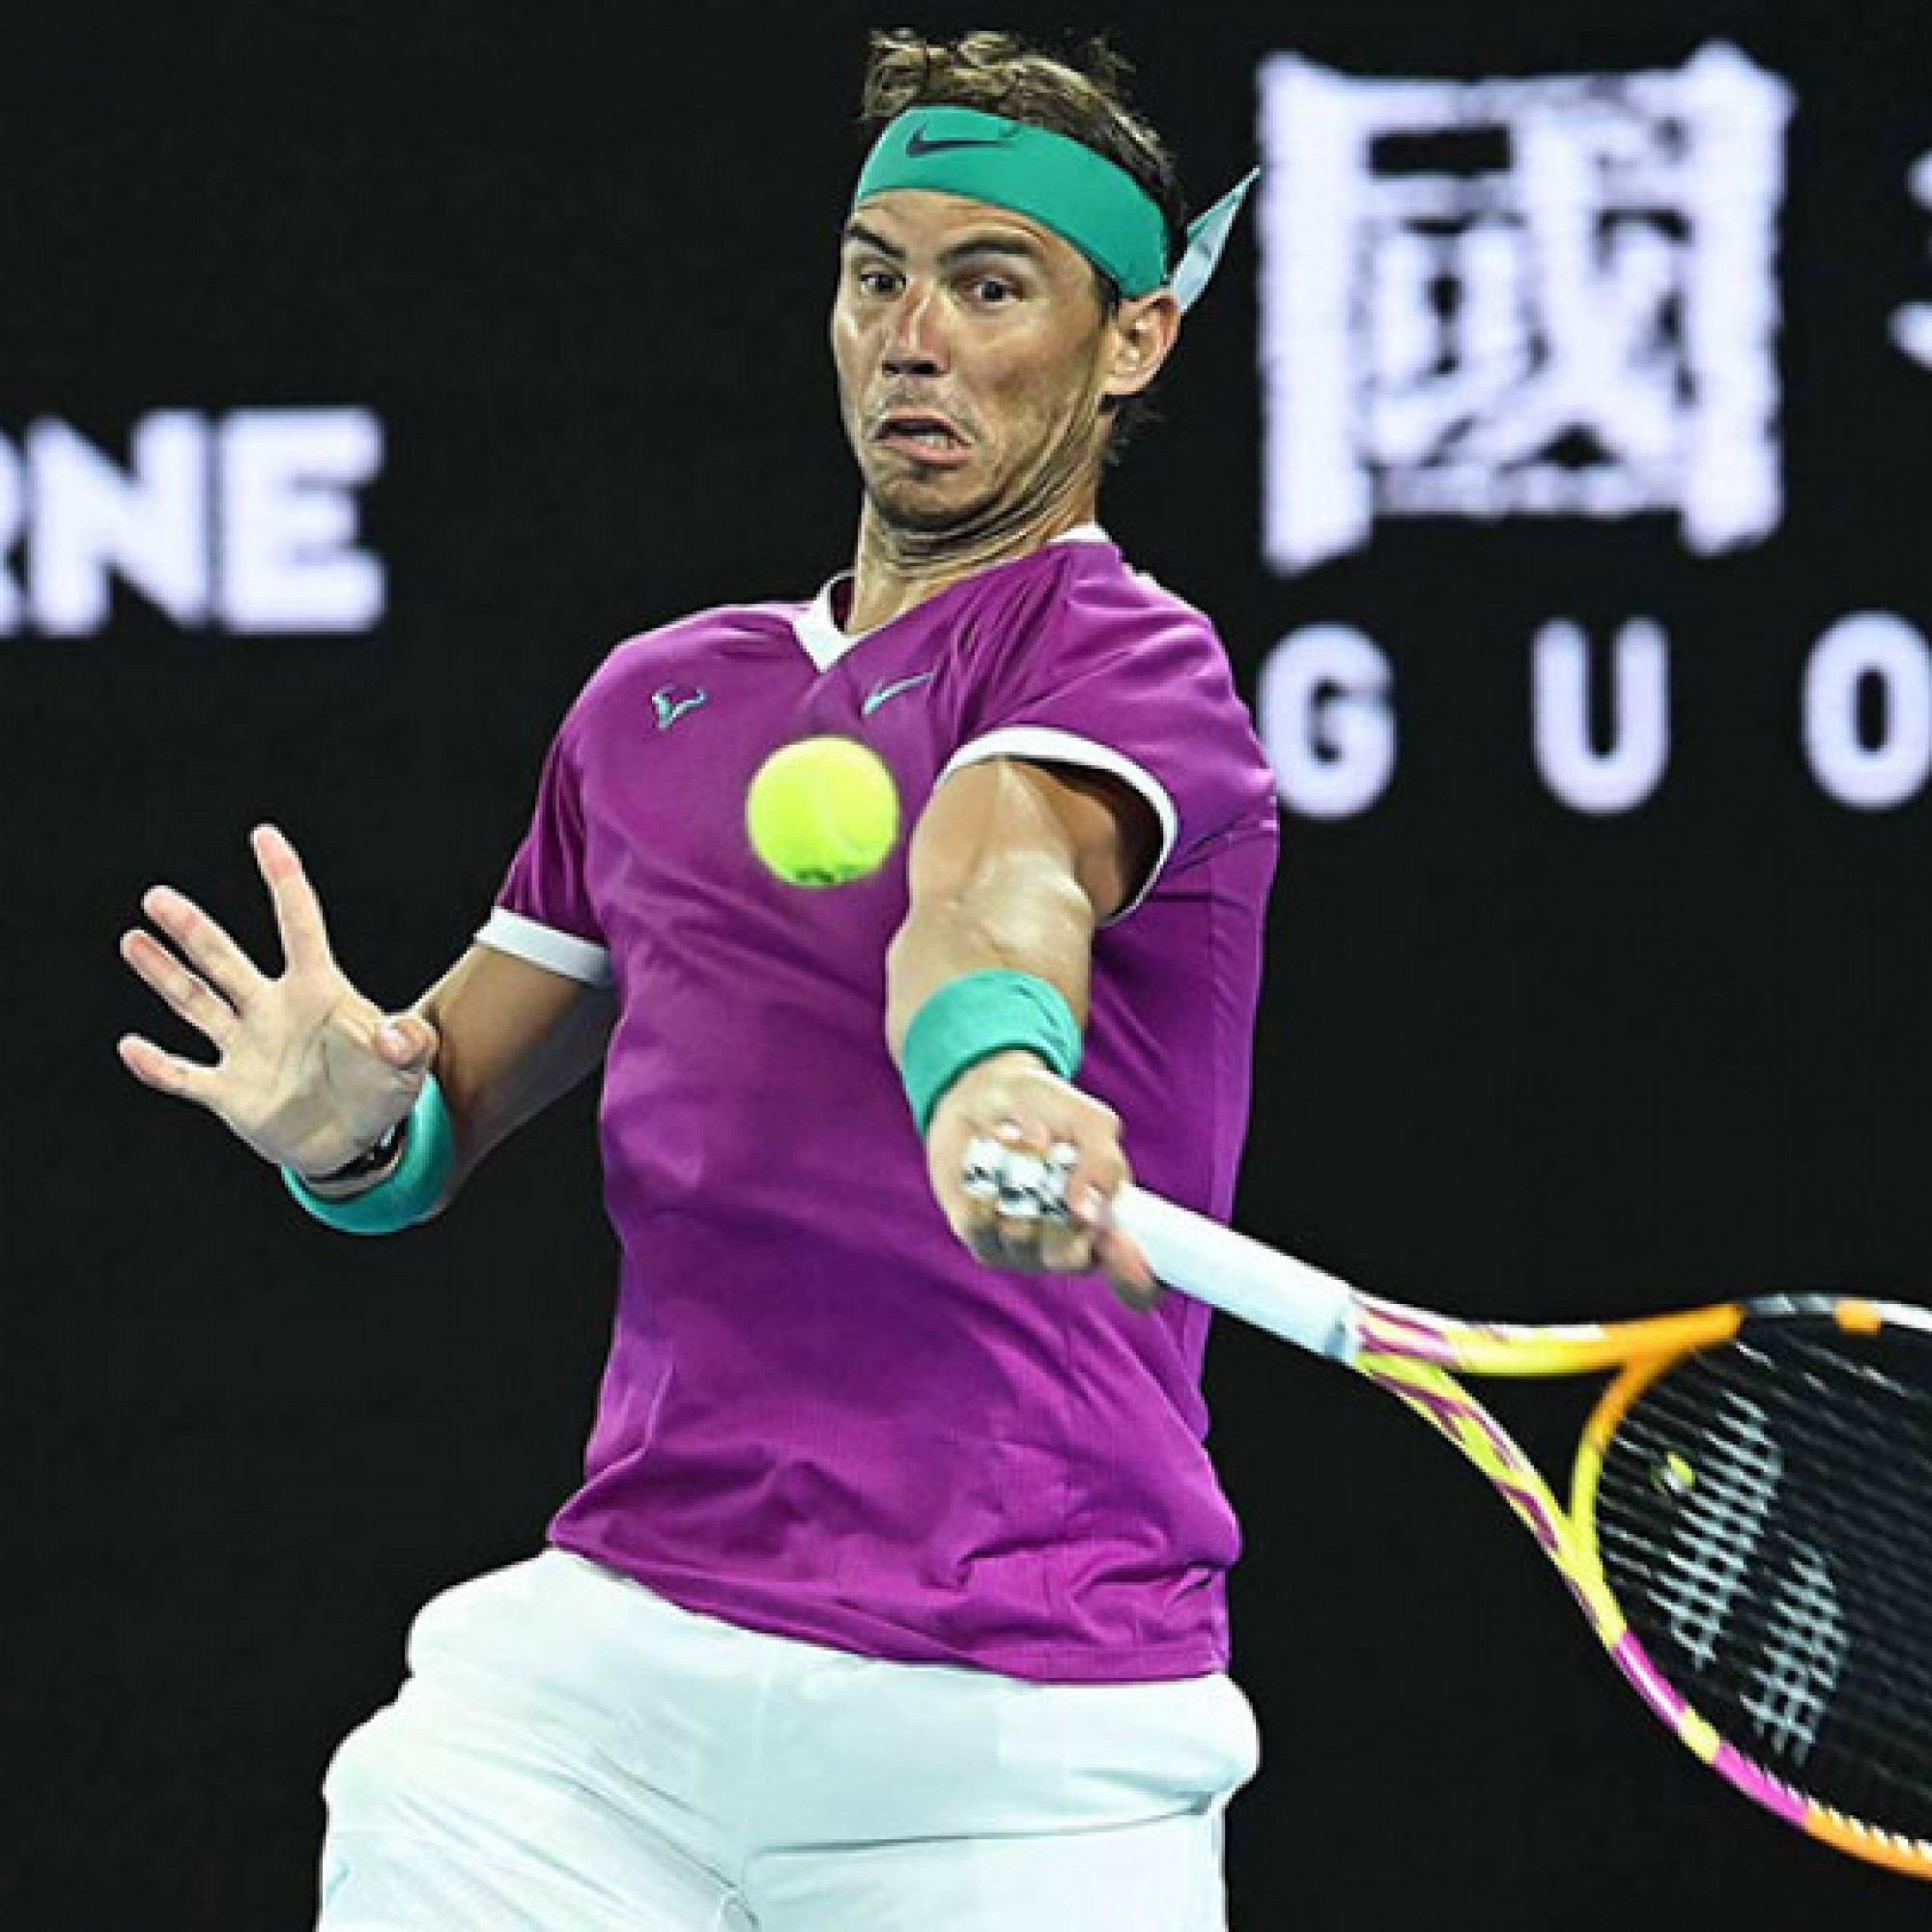  - Trực tiếp tennis Shapovalov - Nadal: "Vua đất nện" cứu 2 break point (Tứ kết Australian Open)